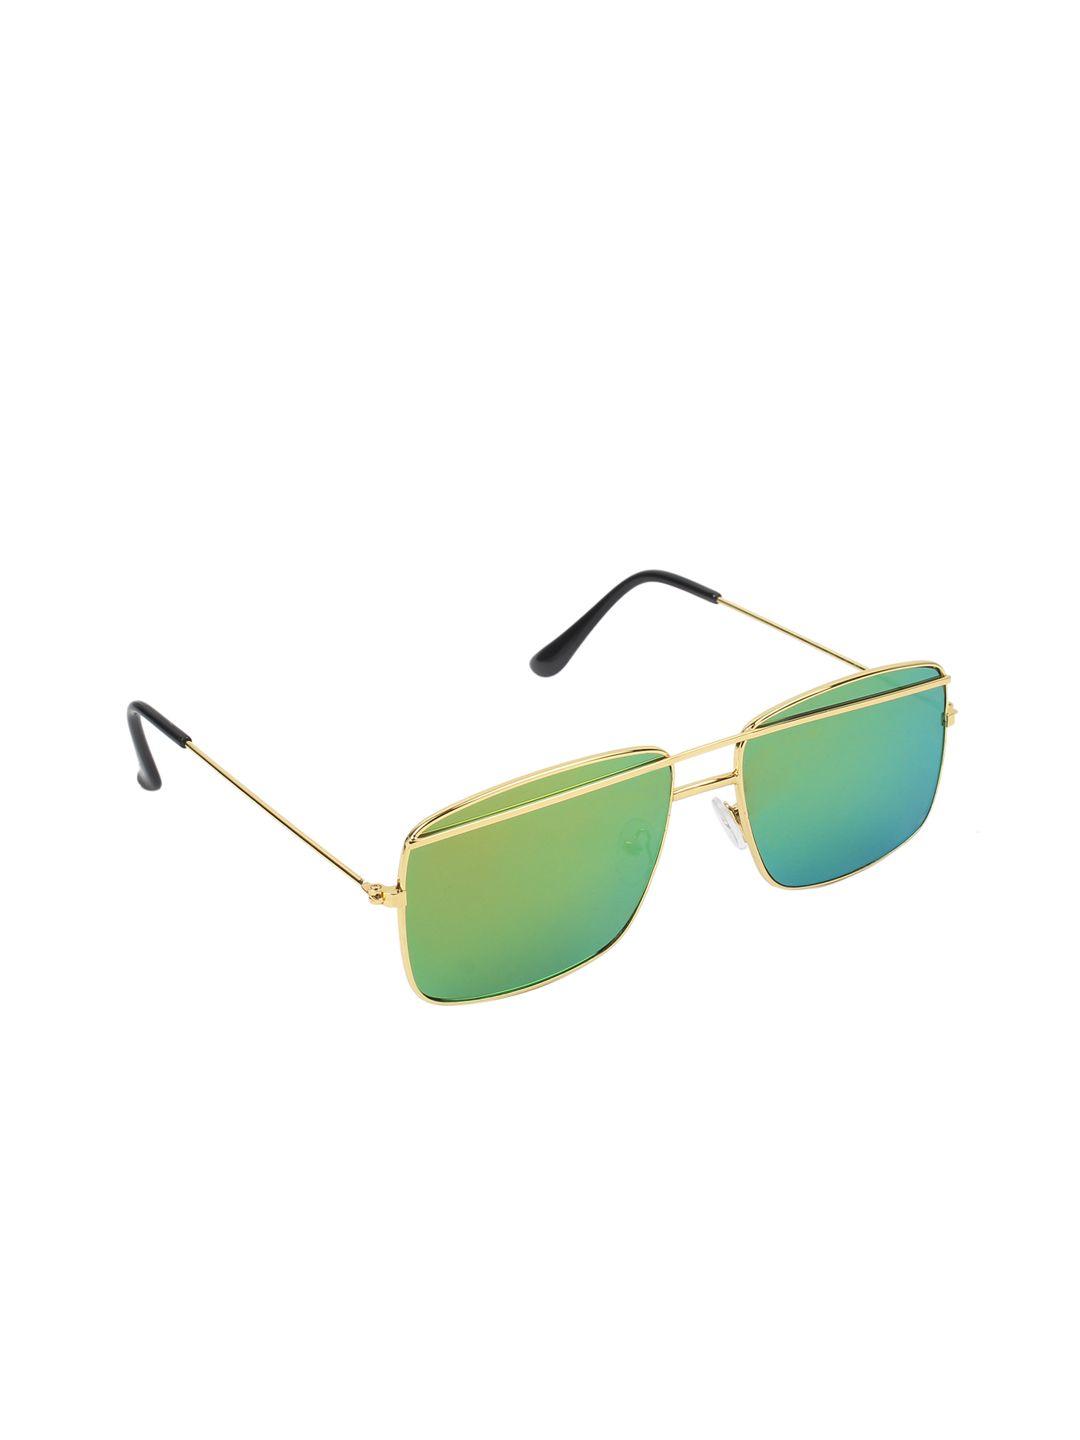 swiss design unisex rectangle sunglasses